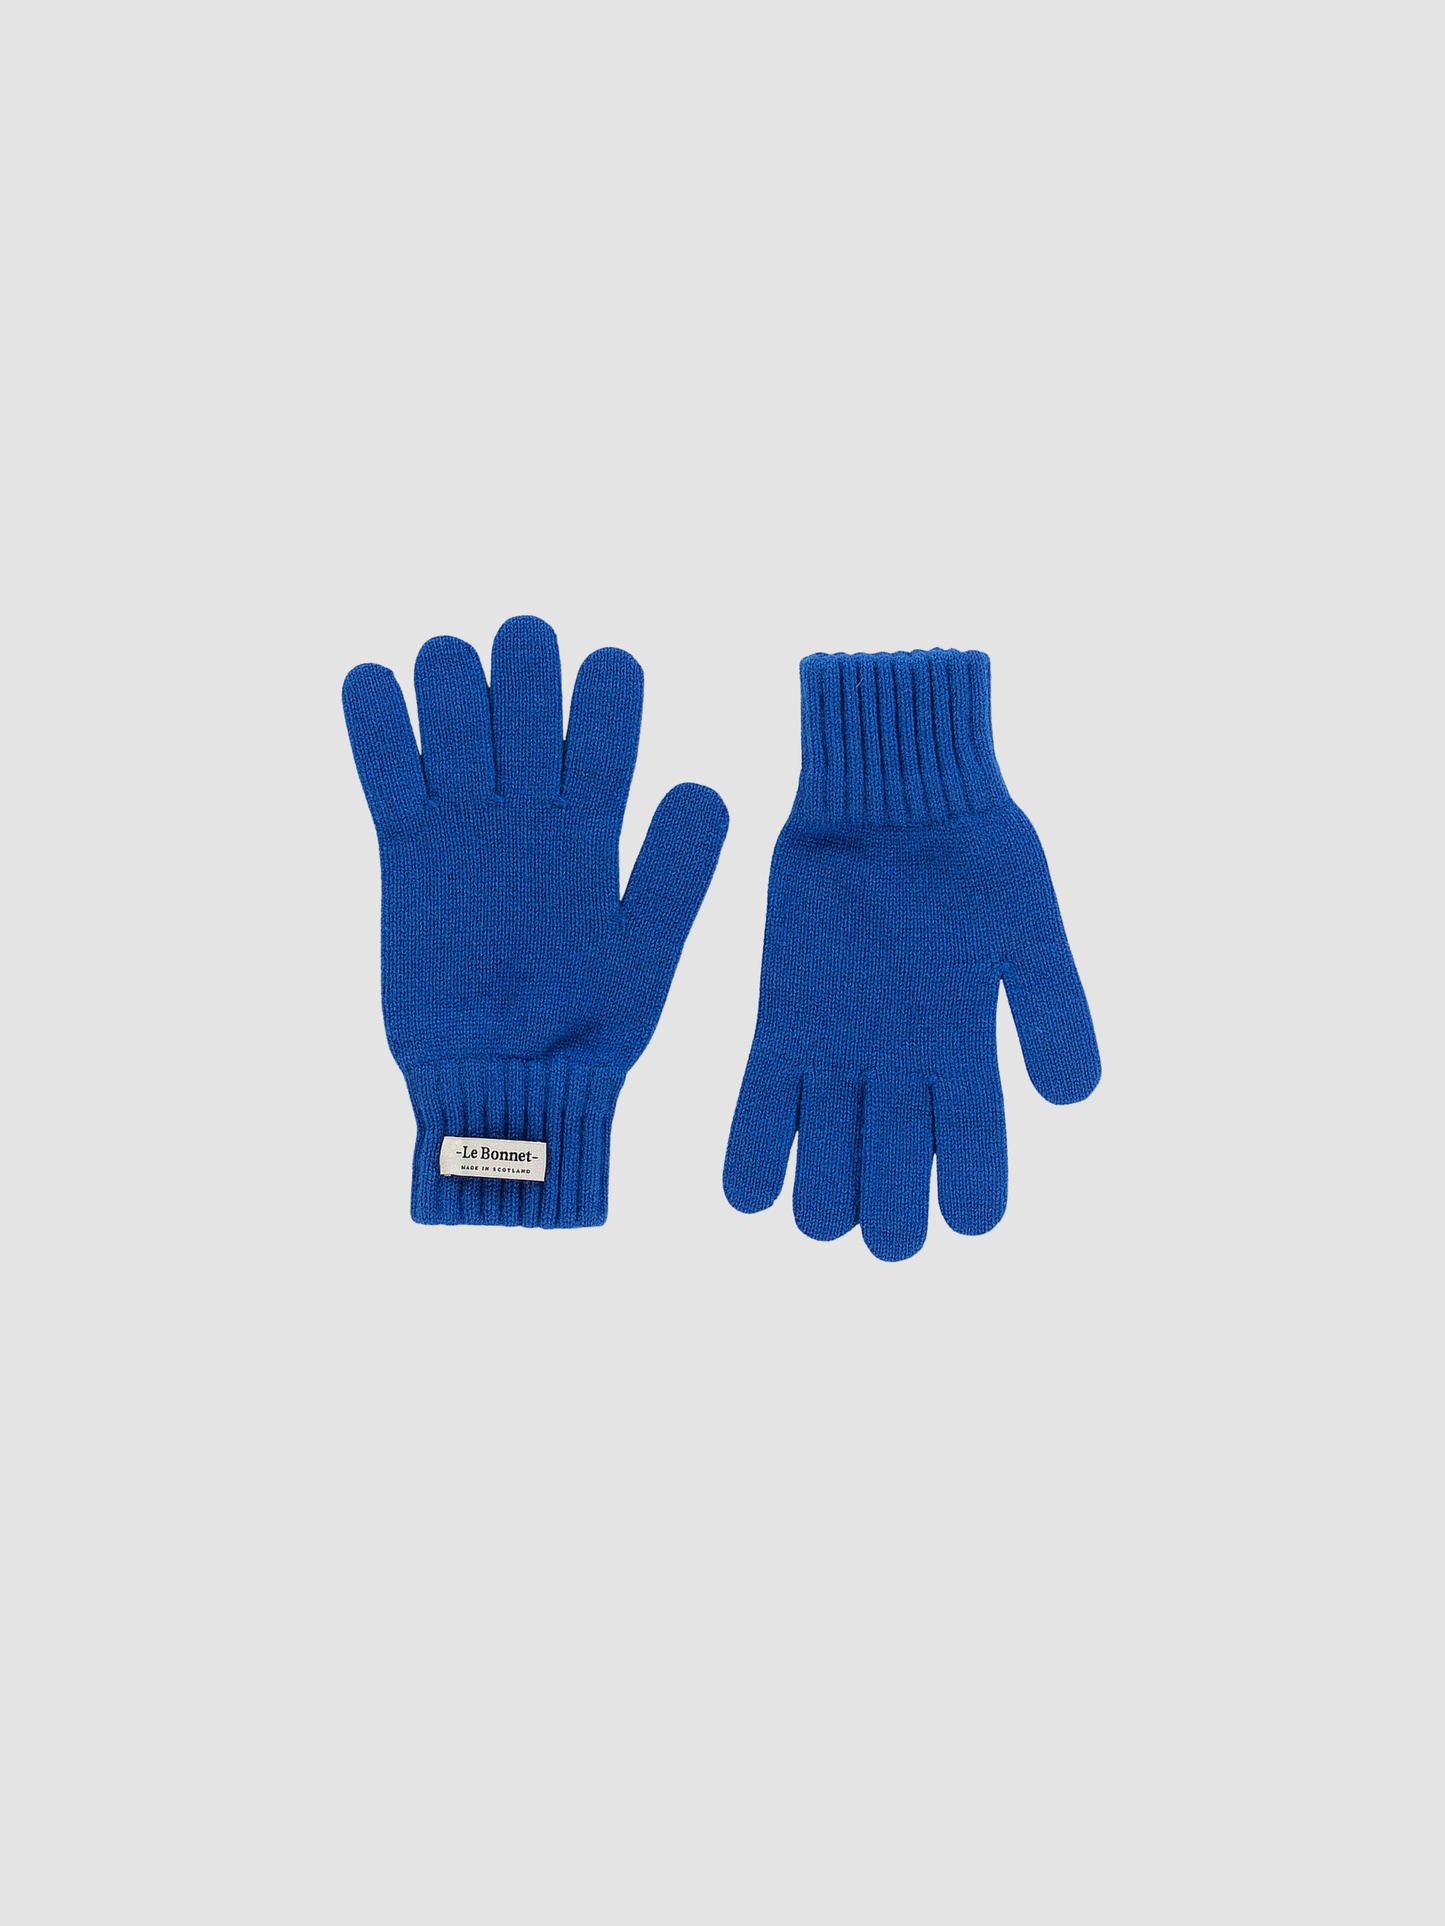 Gloves in Blue